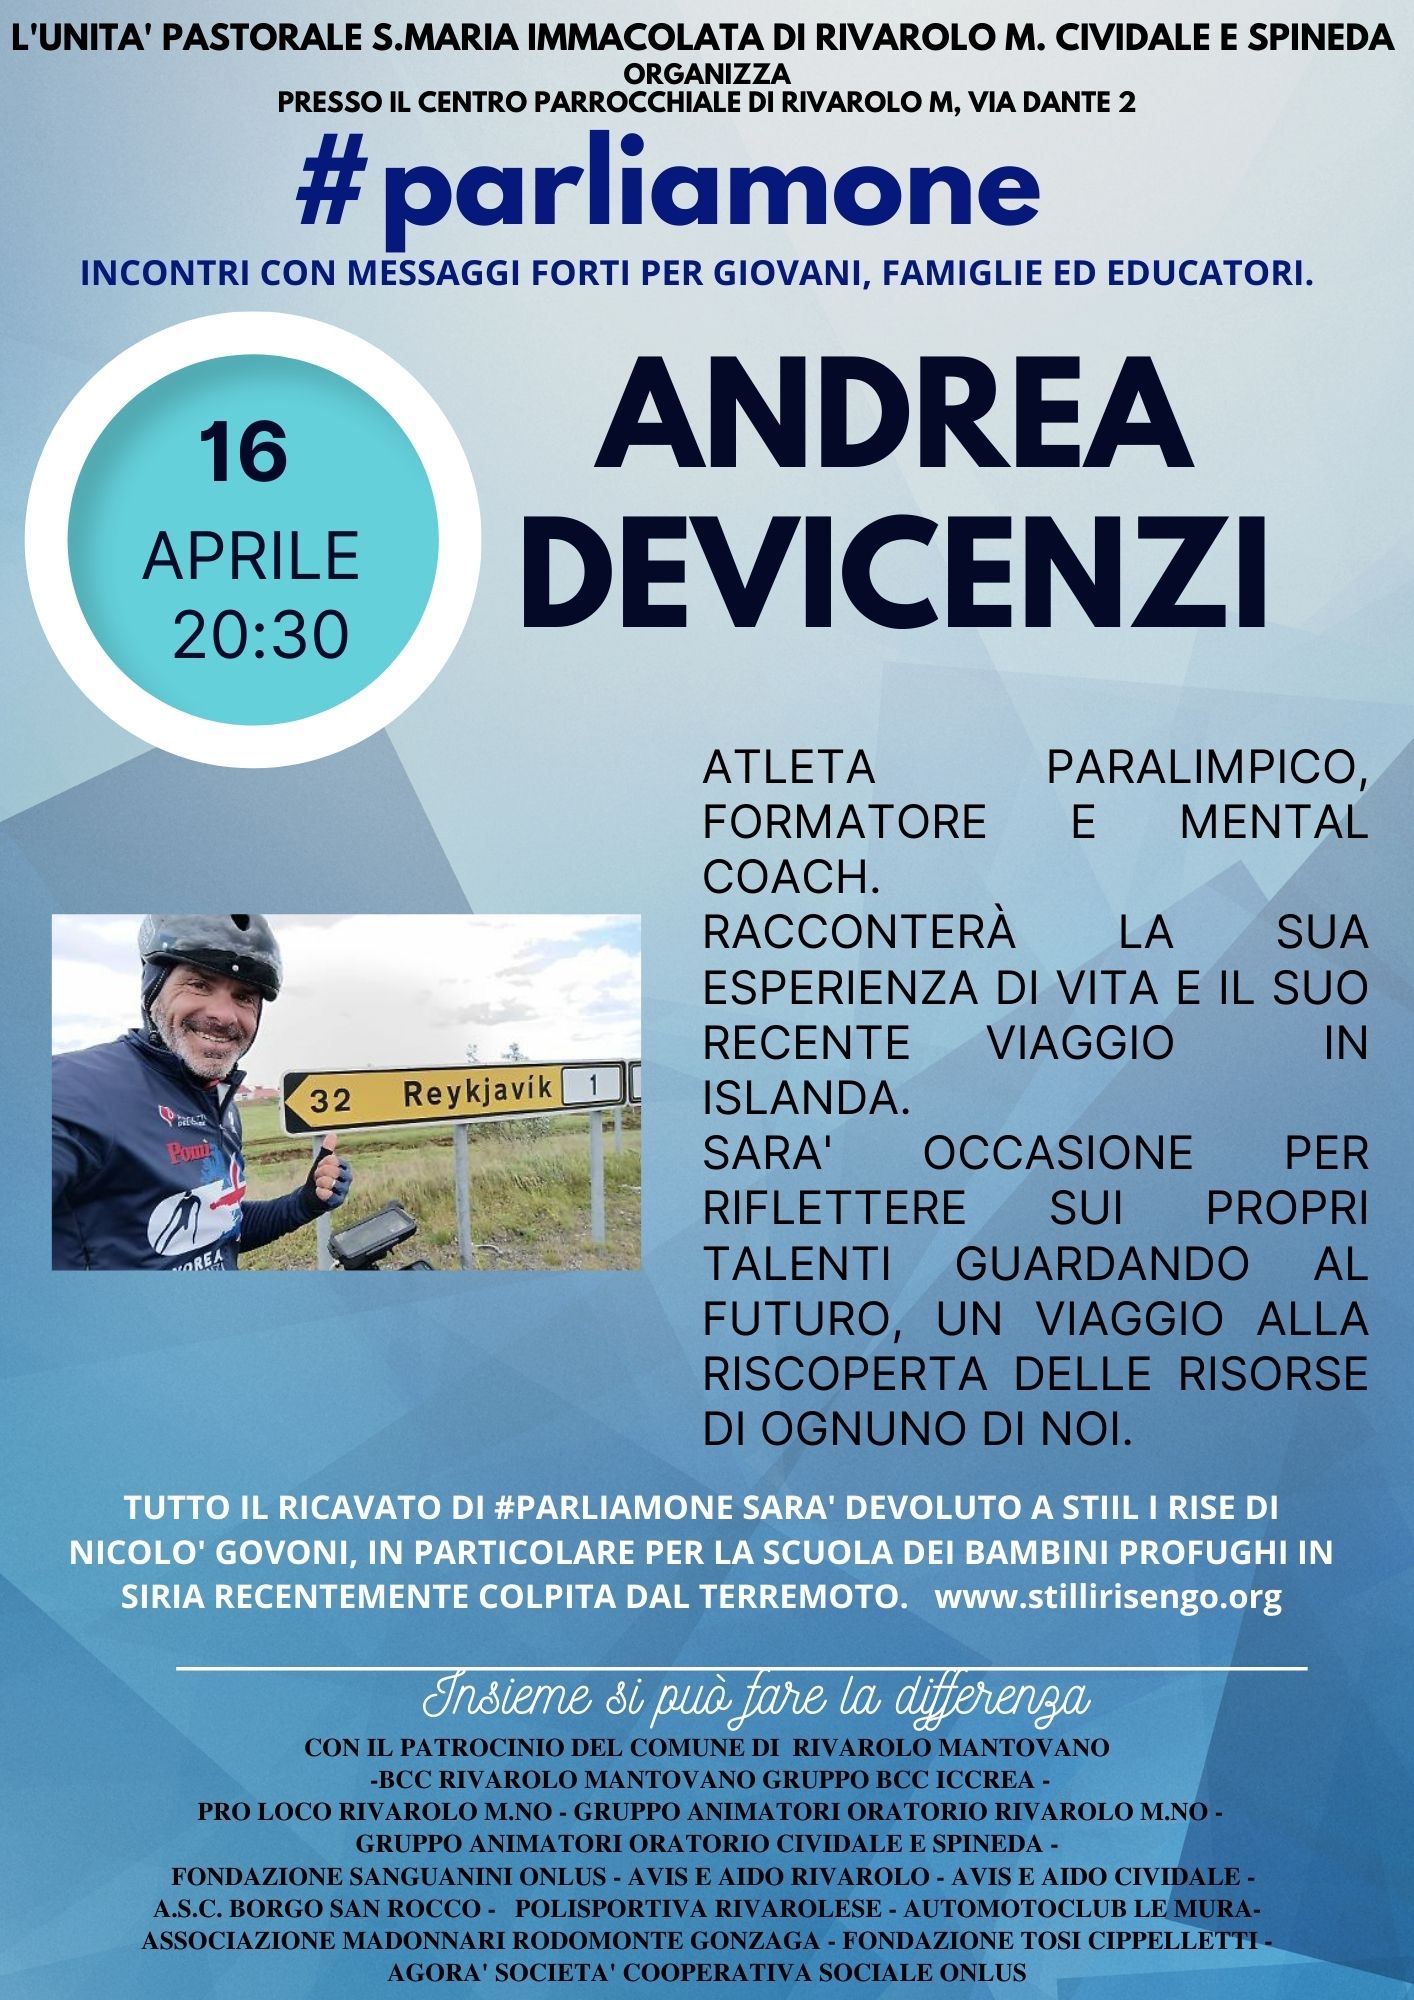 Andrea Devicenzi Rivarolo Mantovano #parliamone